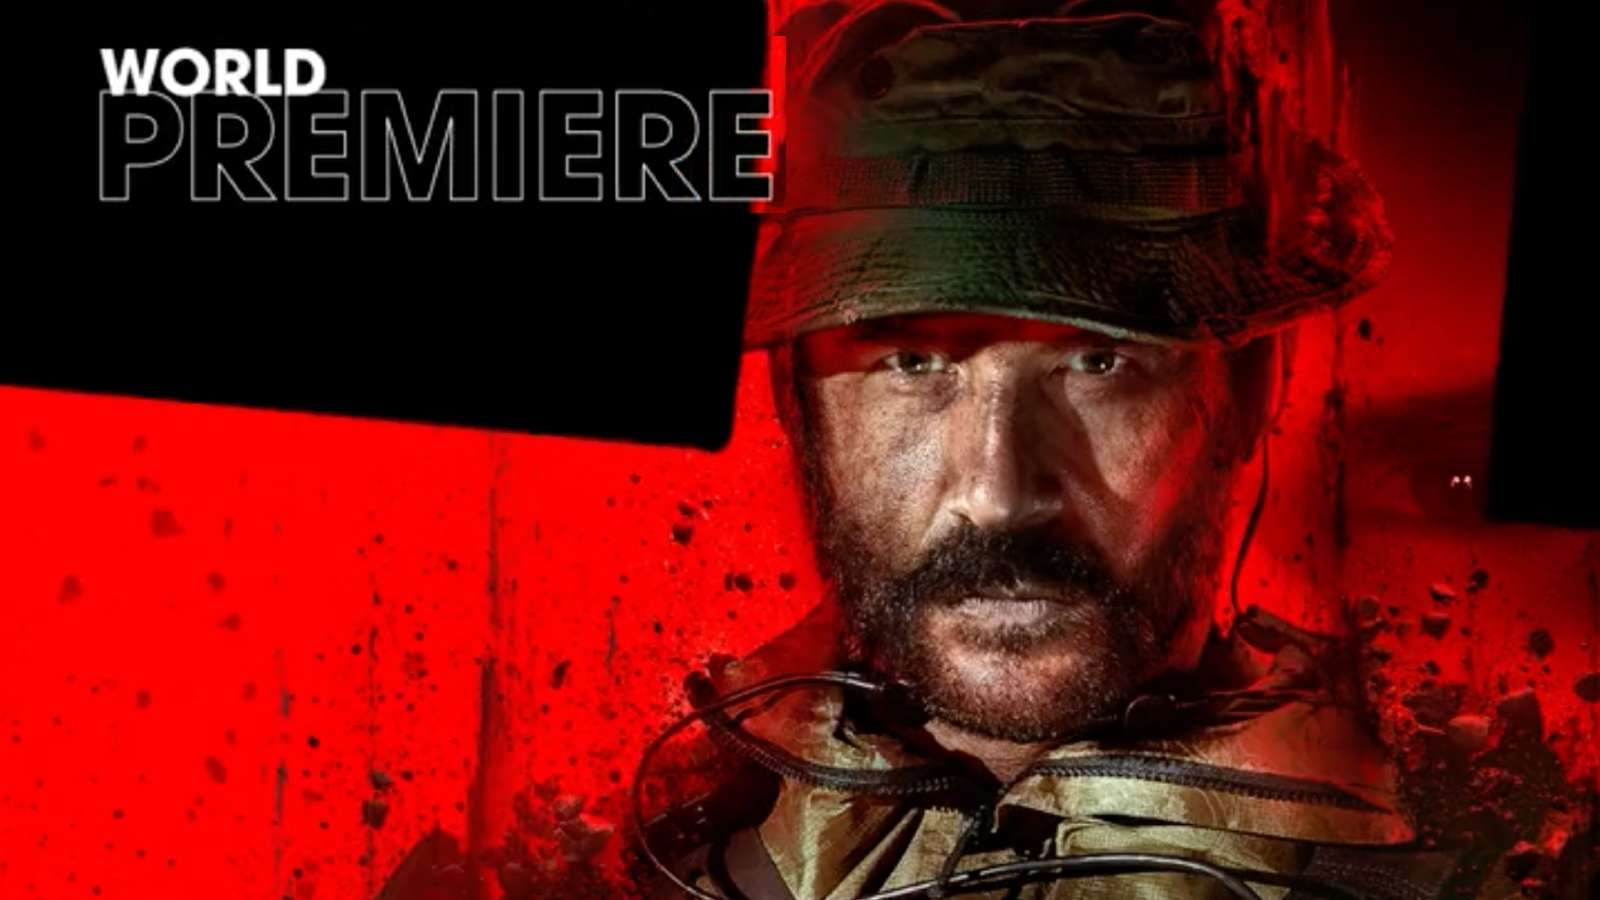 Modern Warfare 3 image with world premiere text